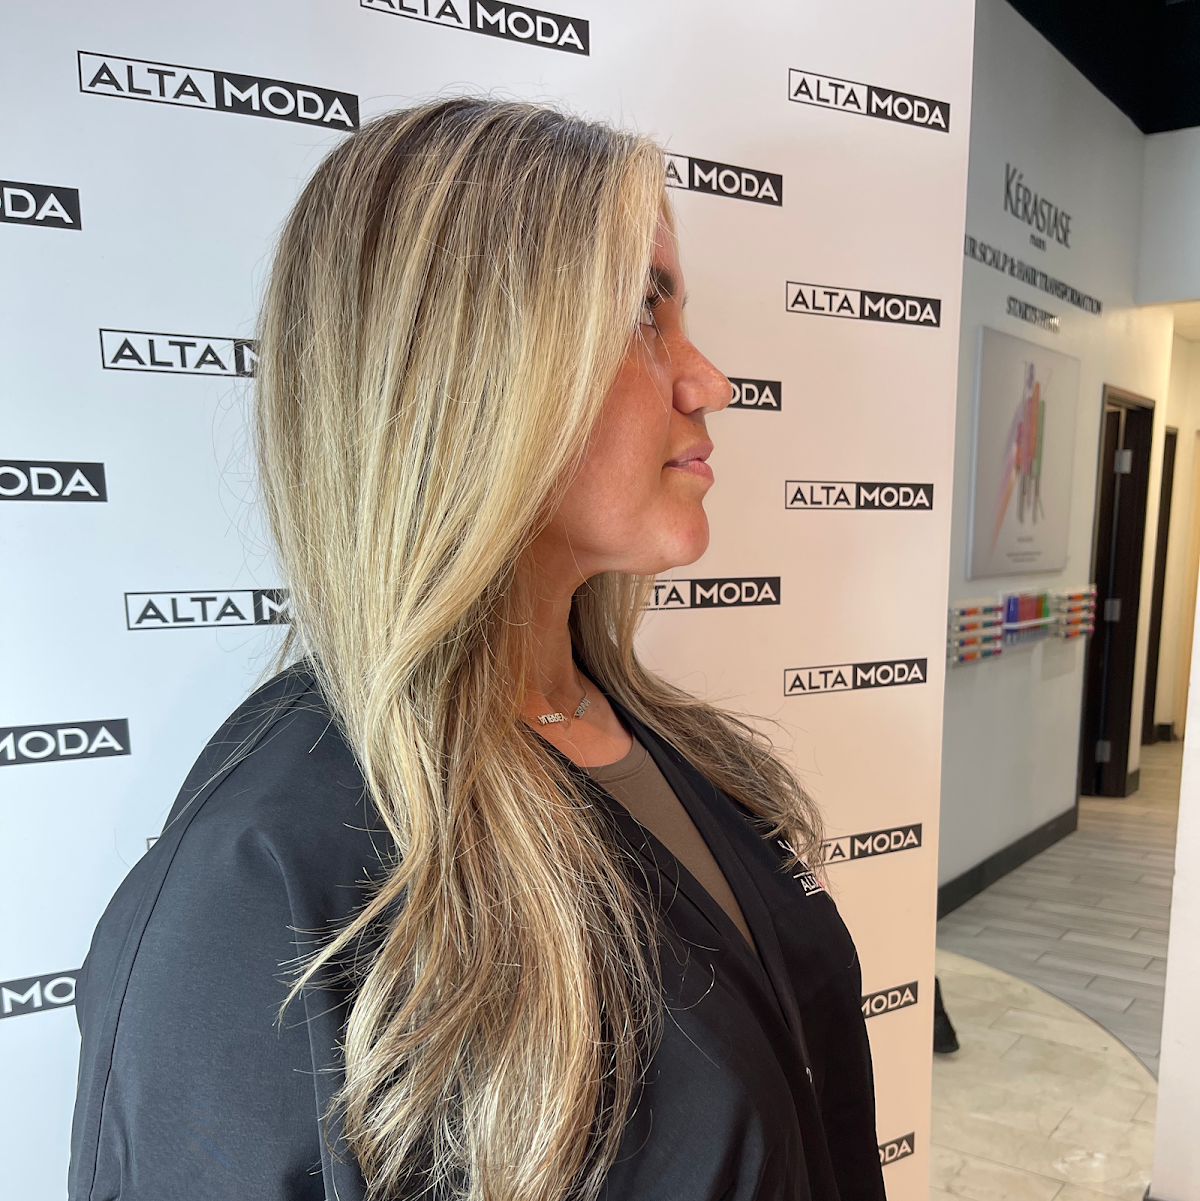 Alta Moda Salon - Reviews by Real Customers - TrustAnalytica